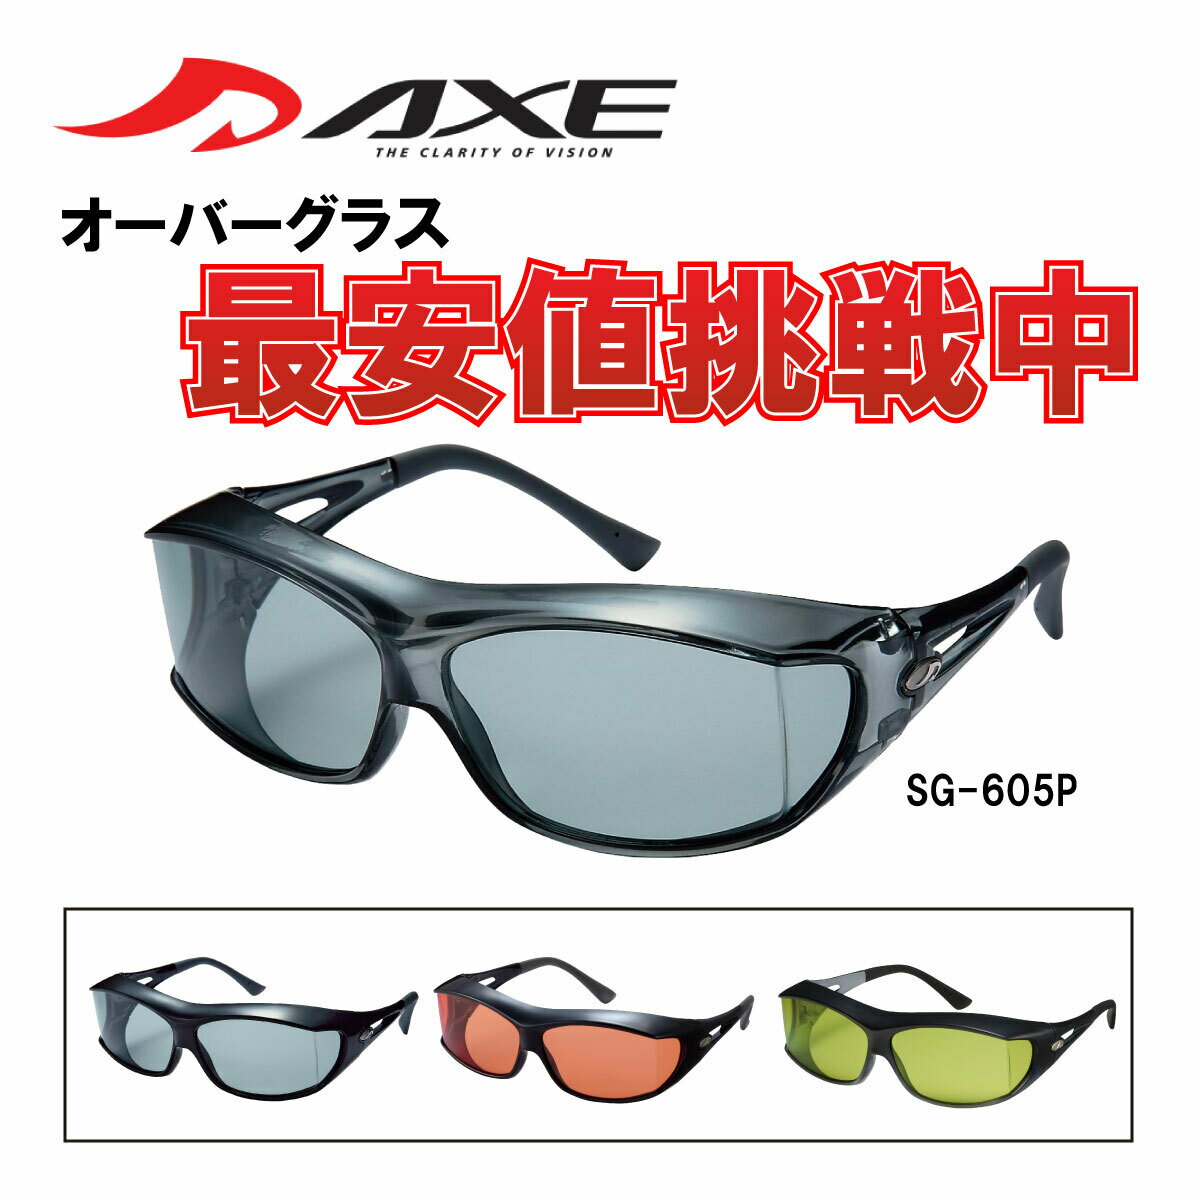  AXE アックス サングラス 偏光 オーバーグラス SG-605P 日本製 オーバーサングラス メガネの上から 偏光サングラス スモーク グリーン オレンジ 釣り ドライブ 登山 ウォーキング メガネ併用可